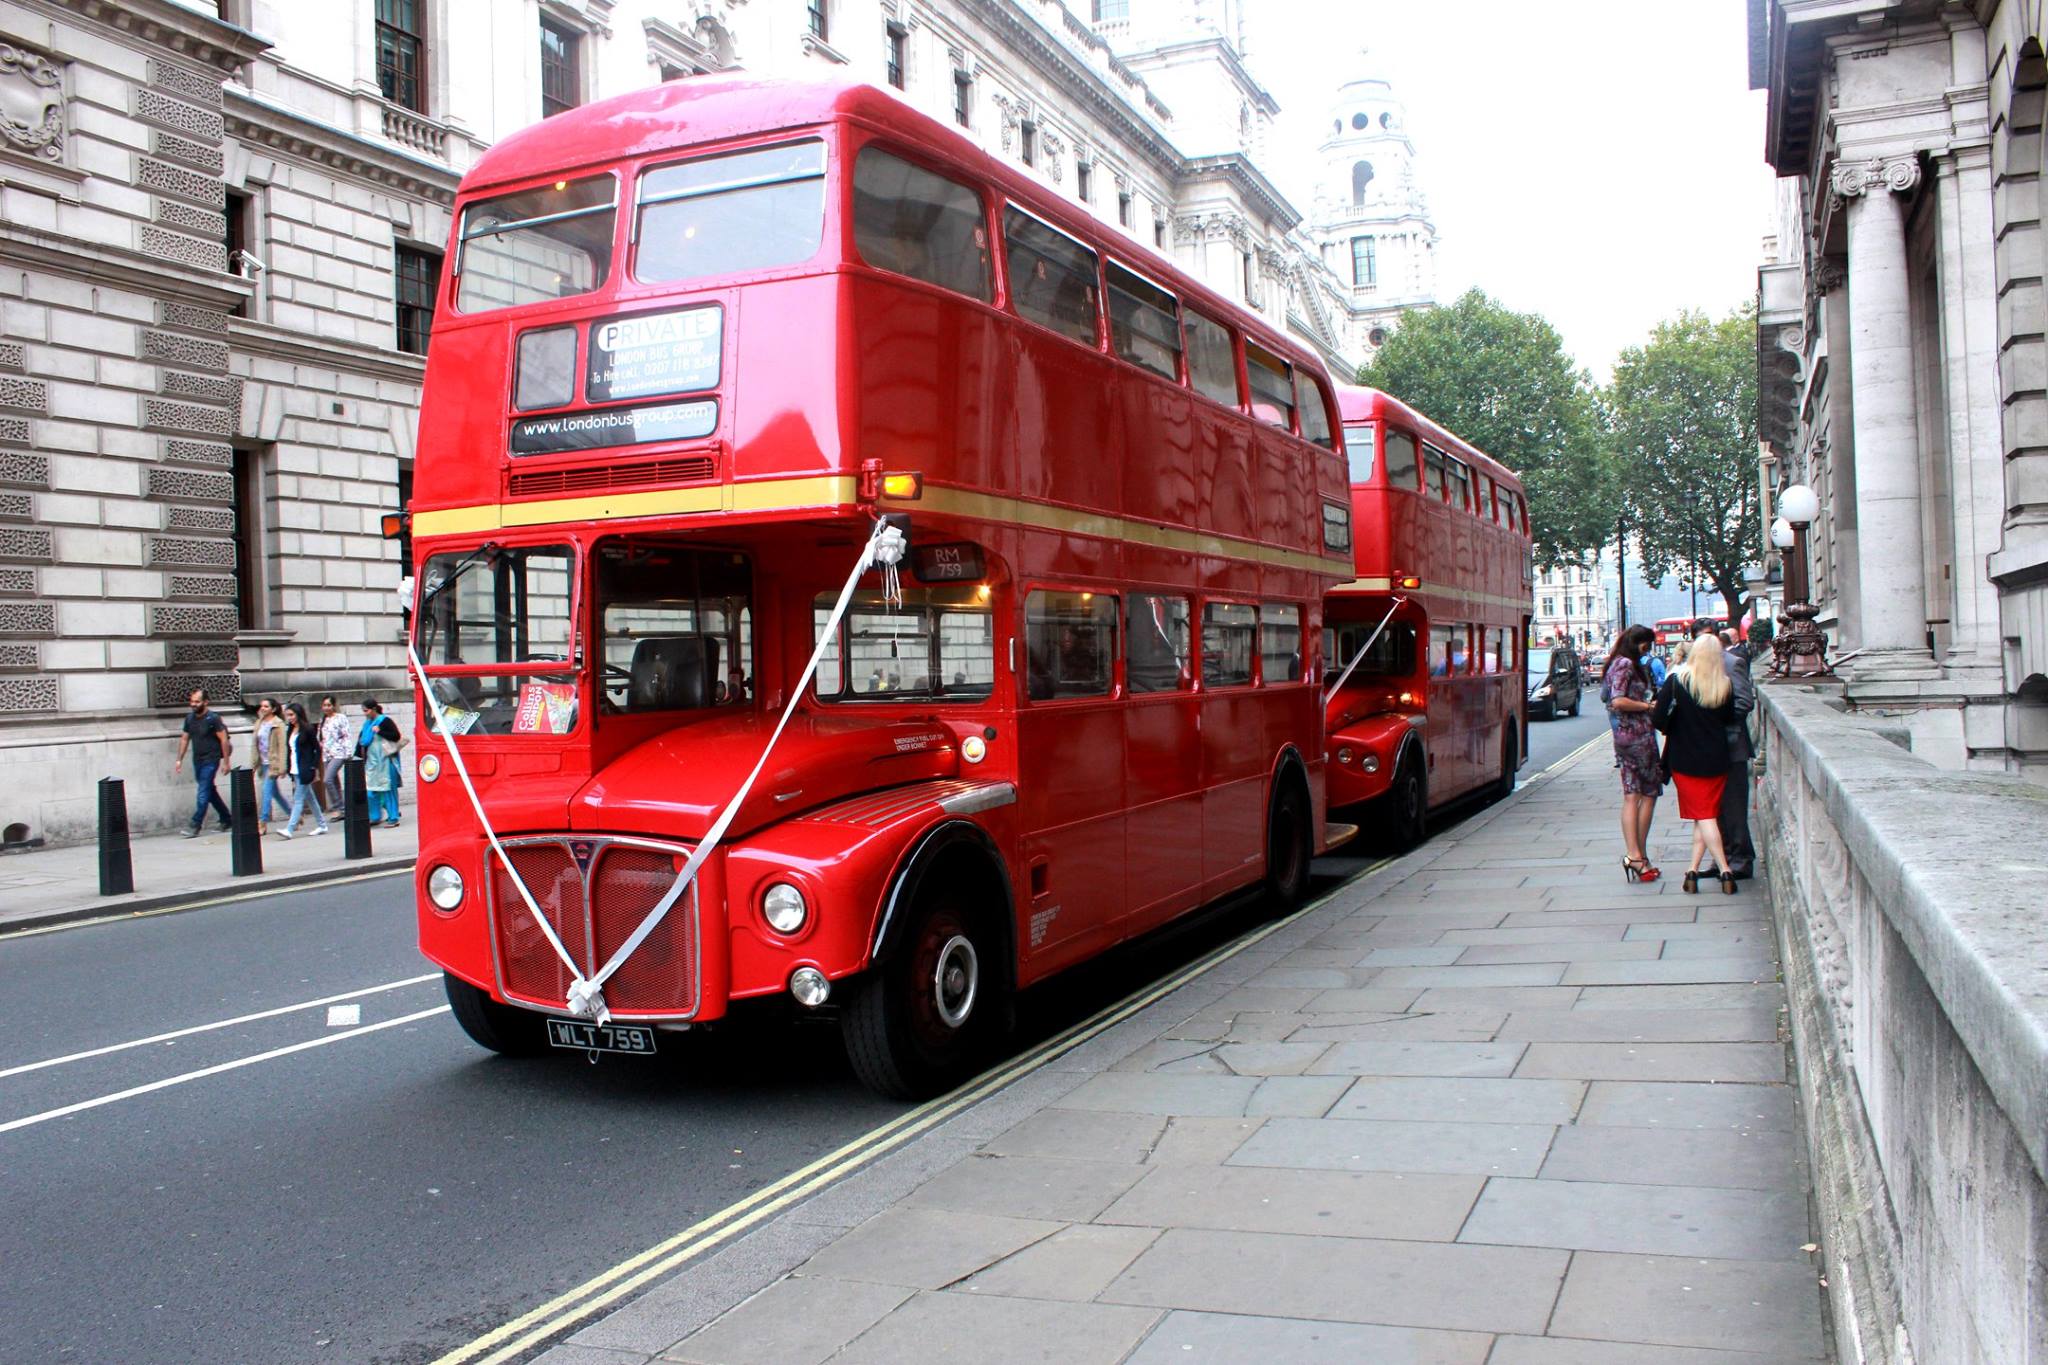 London wedding buses